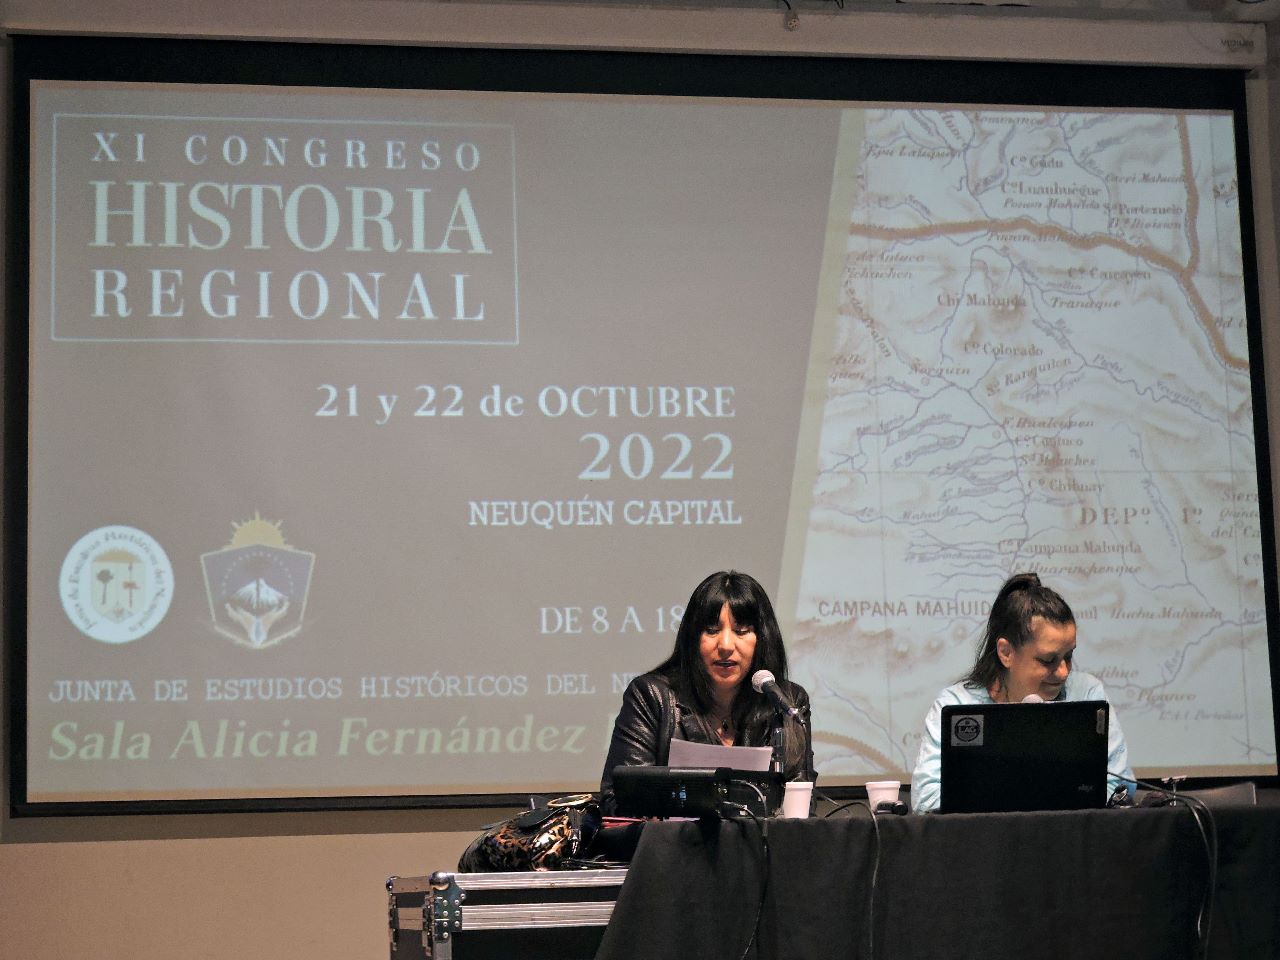 Congreso de Historia Regional 2022 - Neuquén.